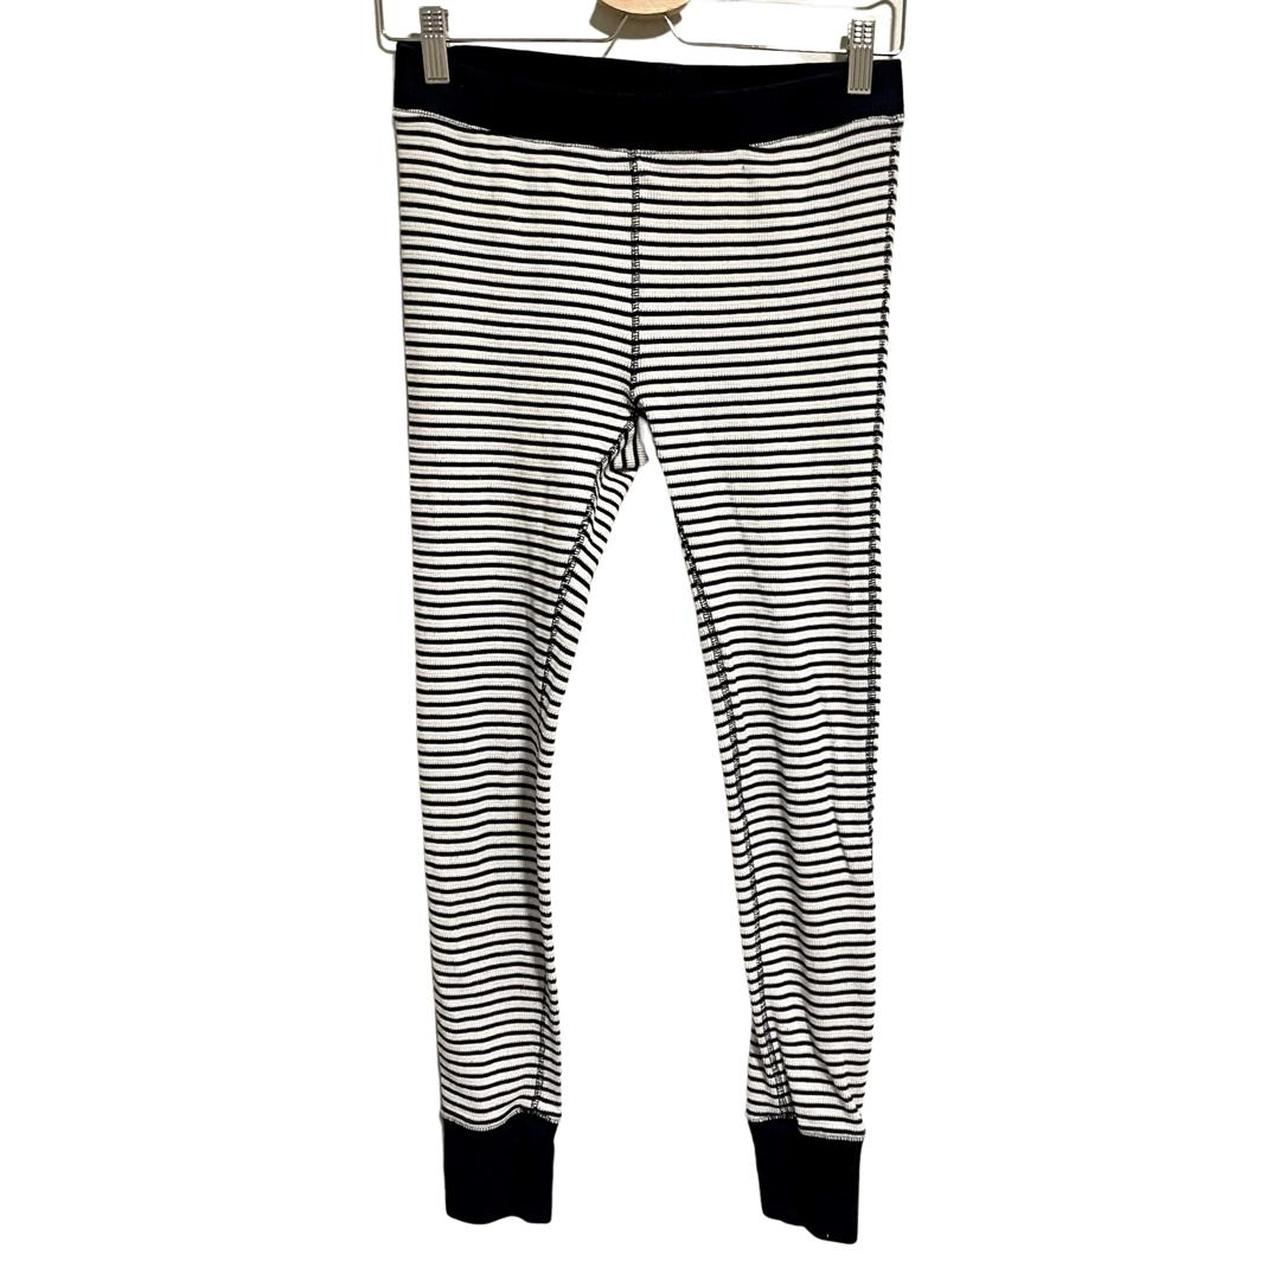 J. Crew Thermal Pajama Pants Long Johns Blue Striped - Depop